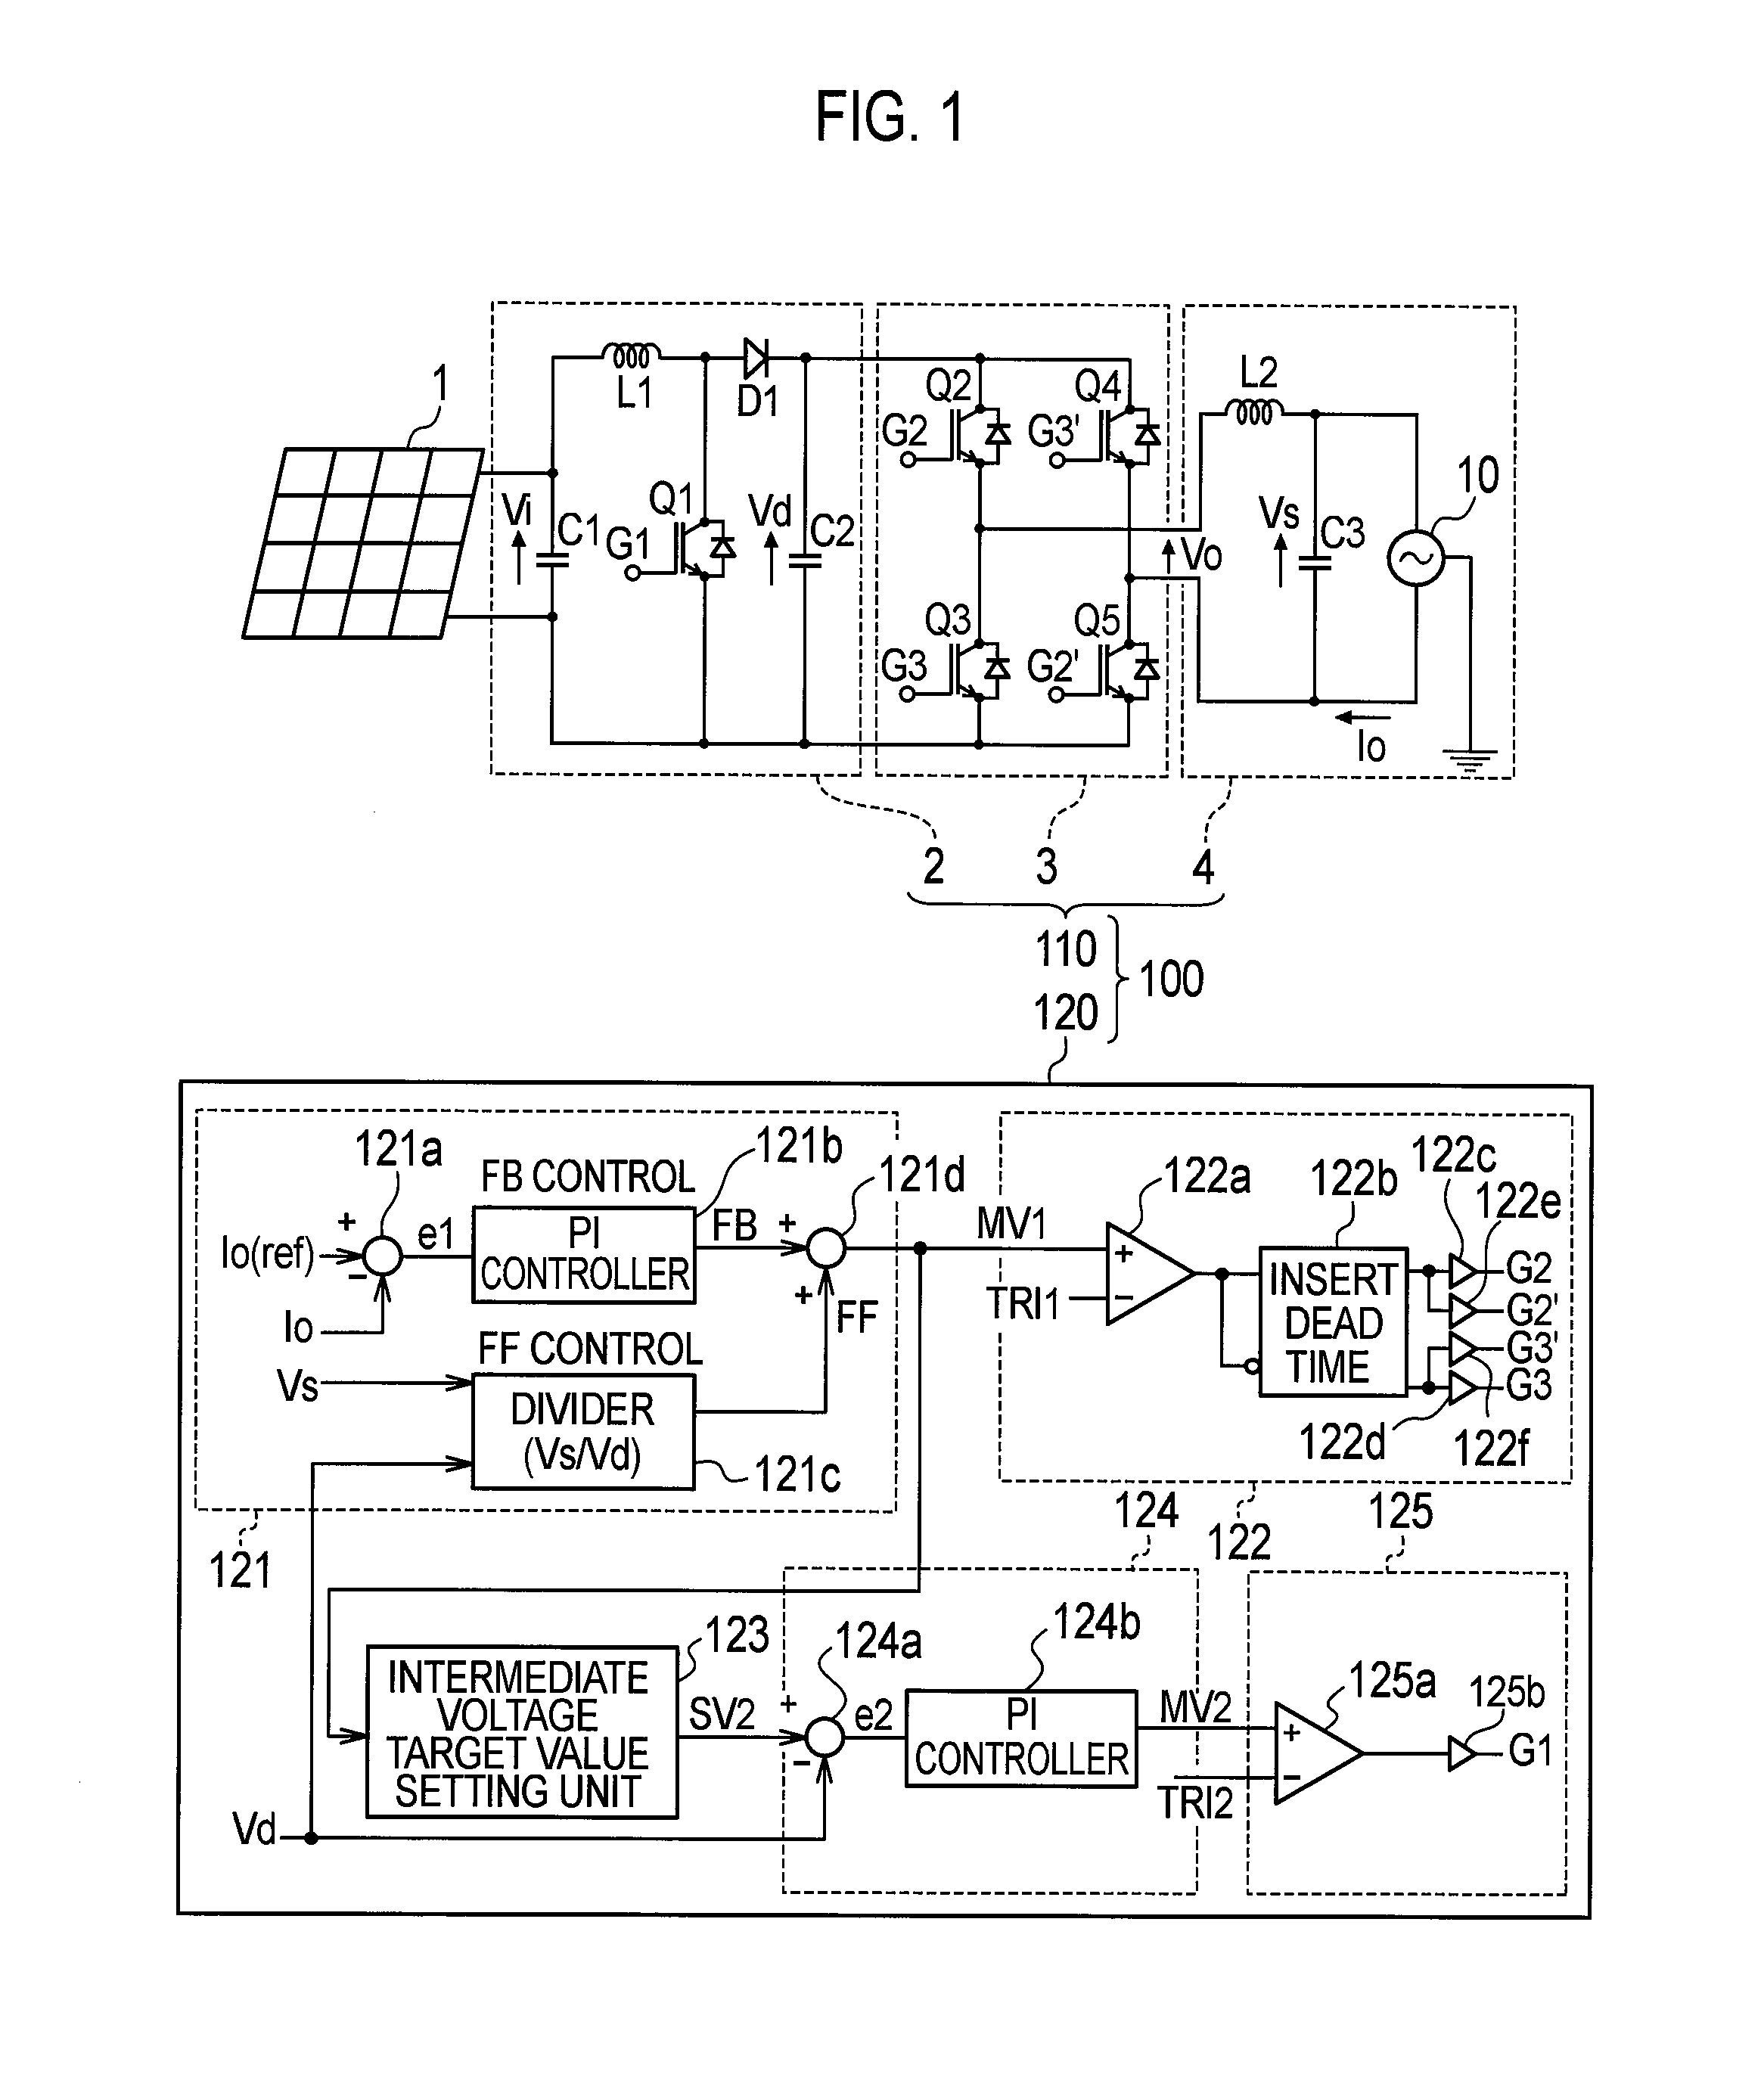 Power converting apparatus, grid interconnetion apparatus and grid interconnection system